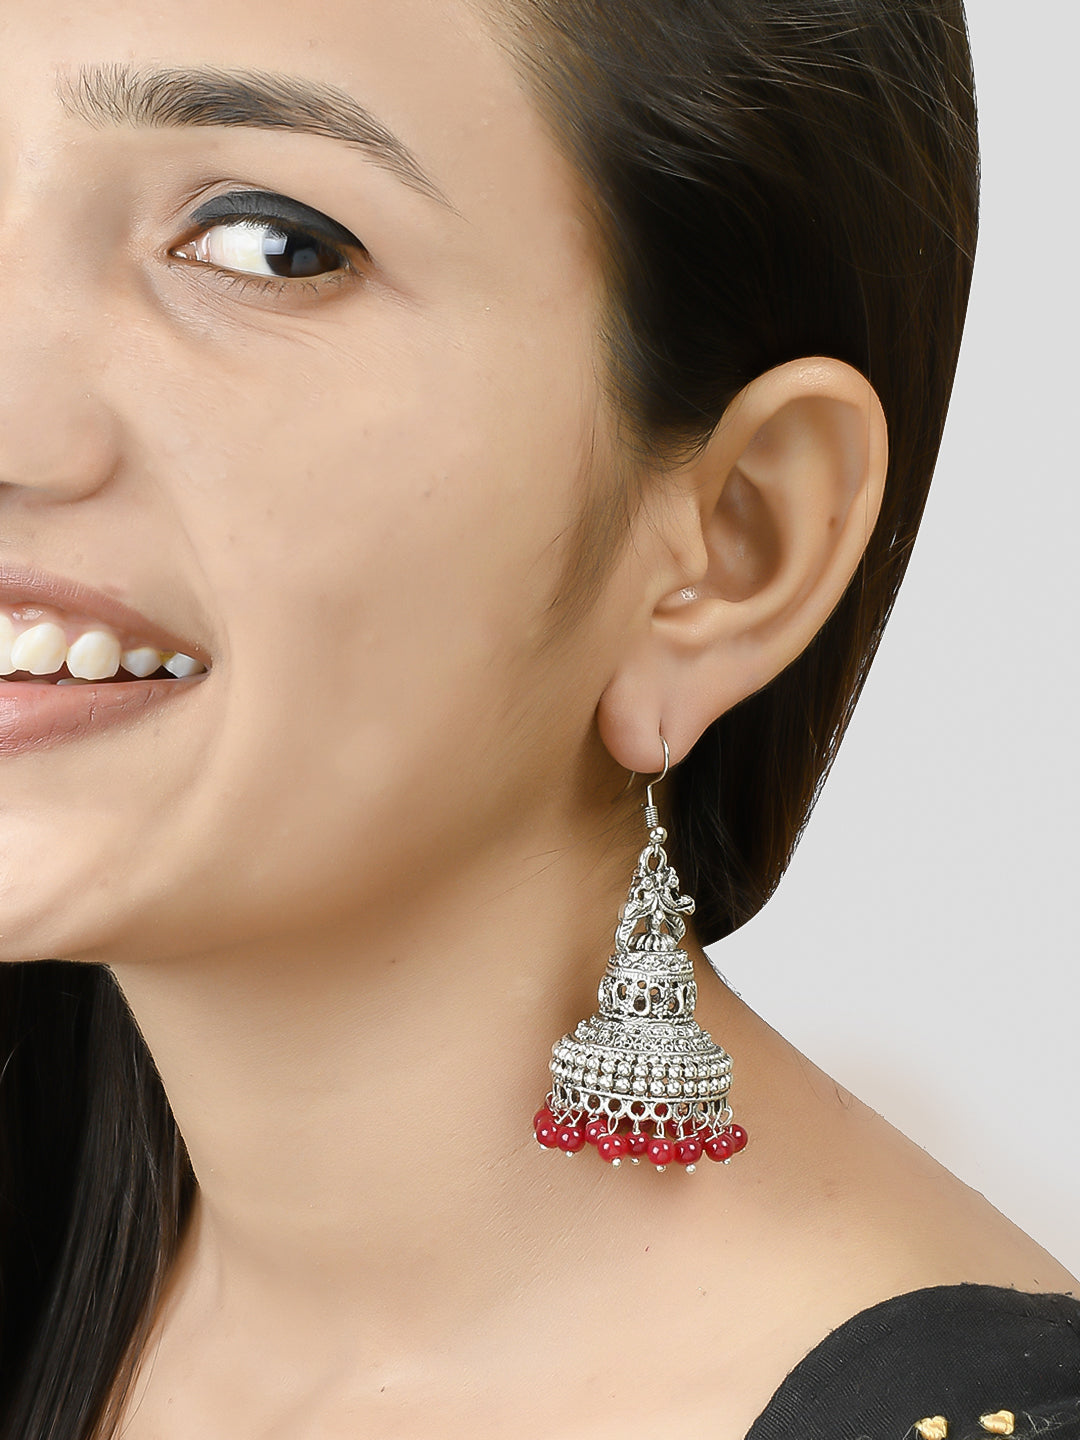 Silver Plated Temple Jhumka Earrings